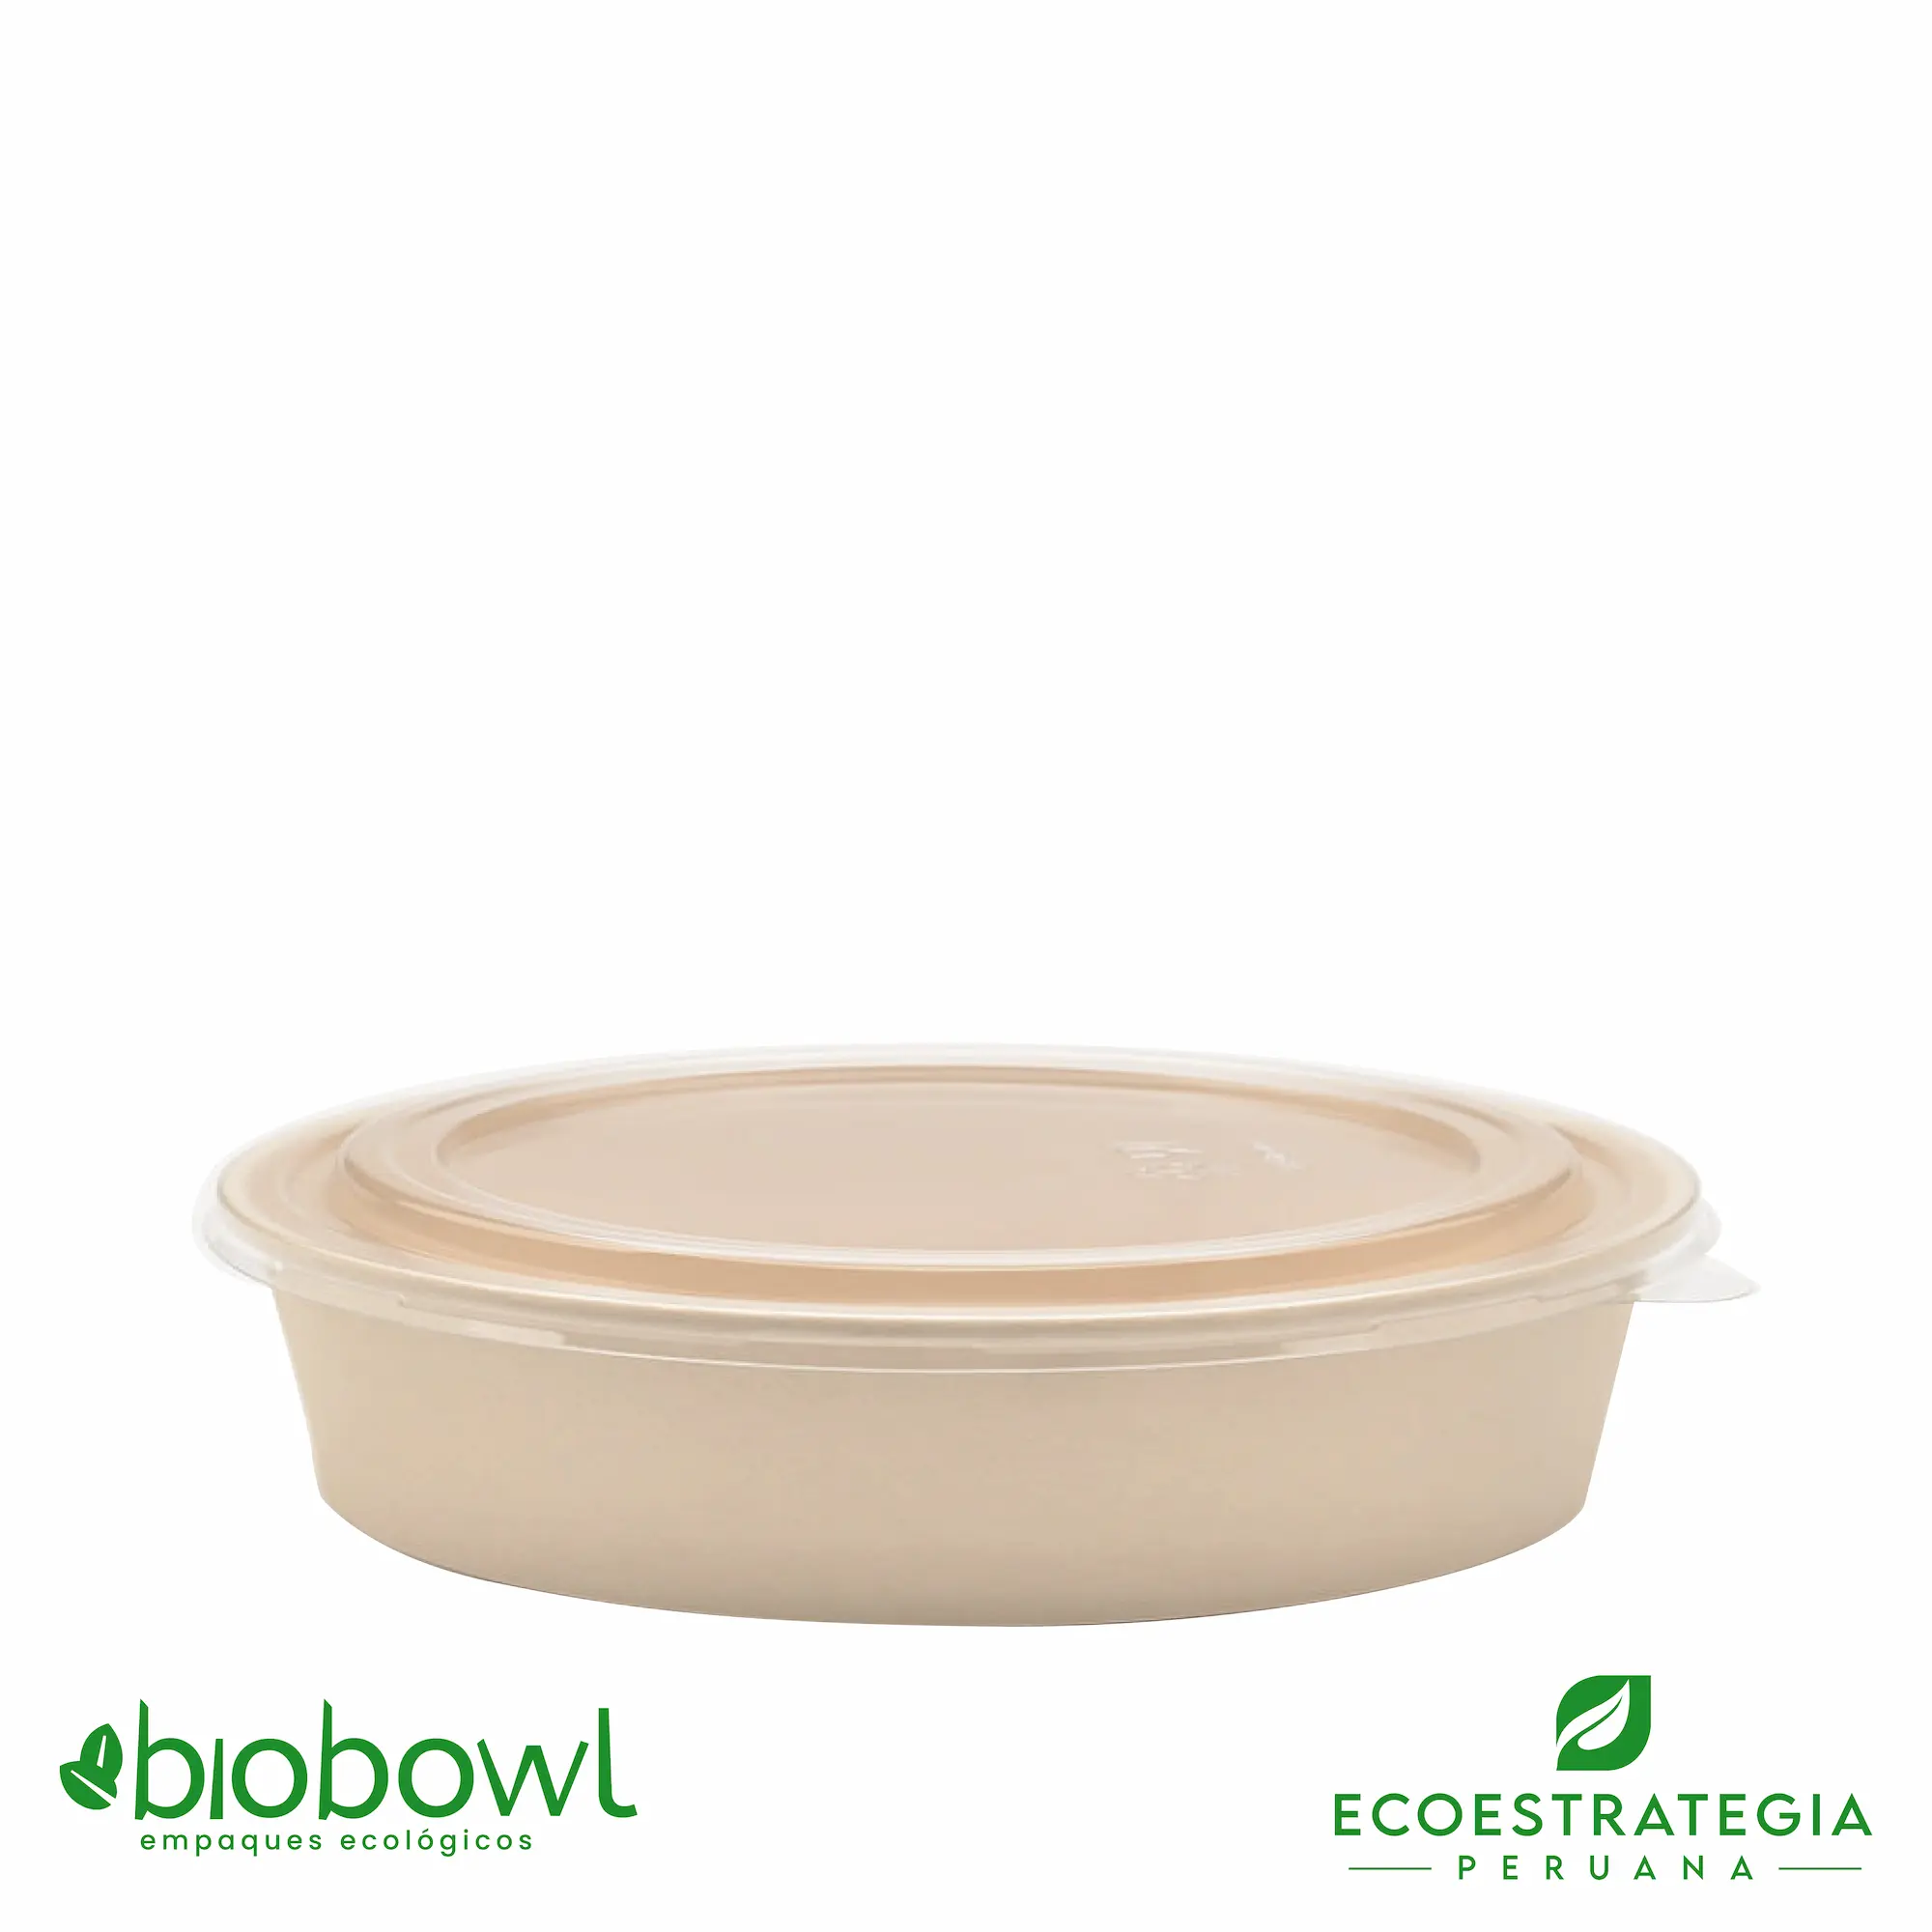 Esta bowl biodegradable de 500 ml es a base de fibra de bambu. Envases descartables con gramaje ideal, cotiza tus empaques, platos y tapers para alimentos